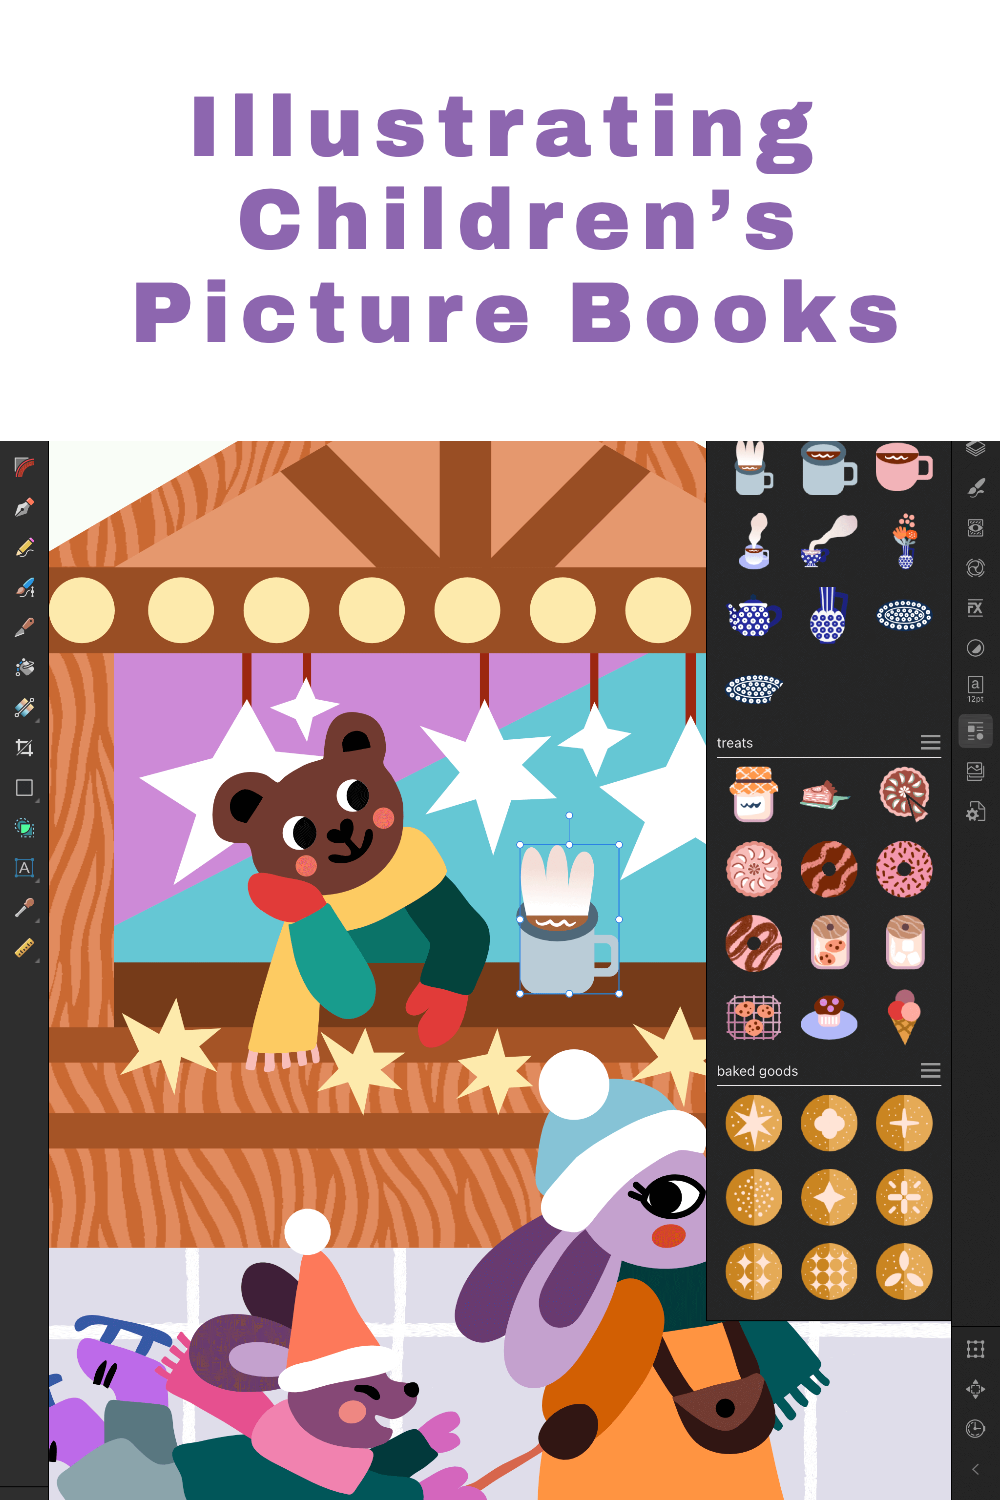 illustrating childrens picture books affinity designer_2.png